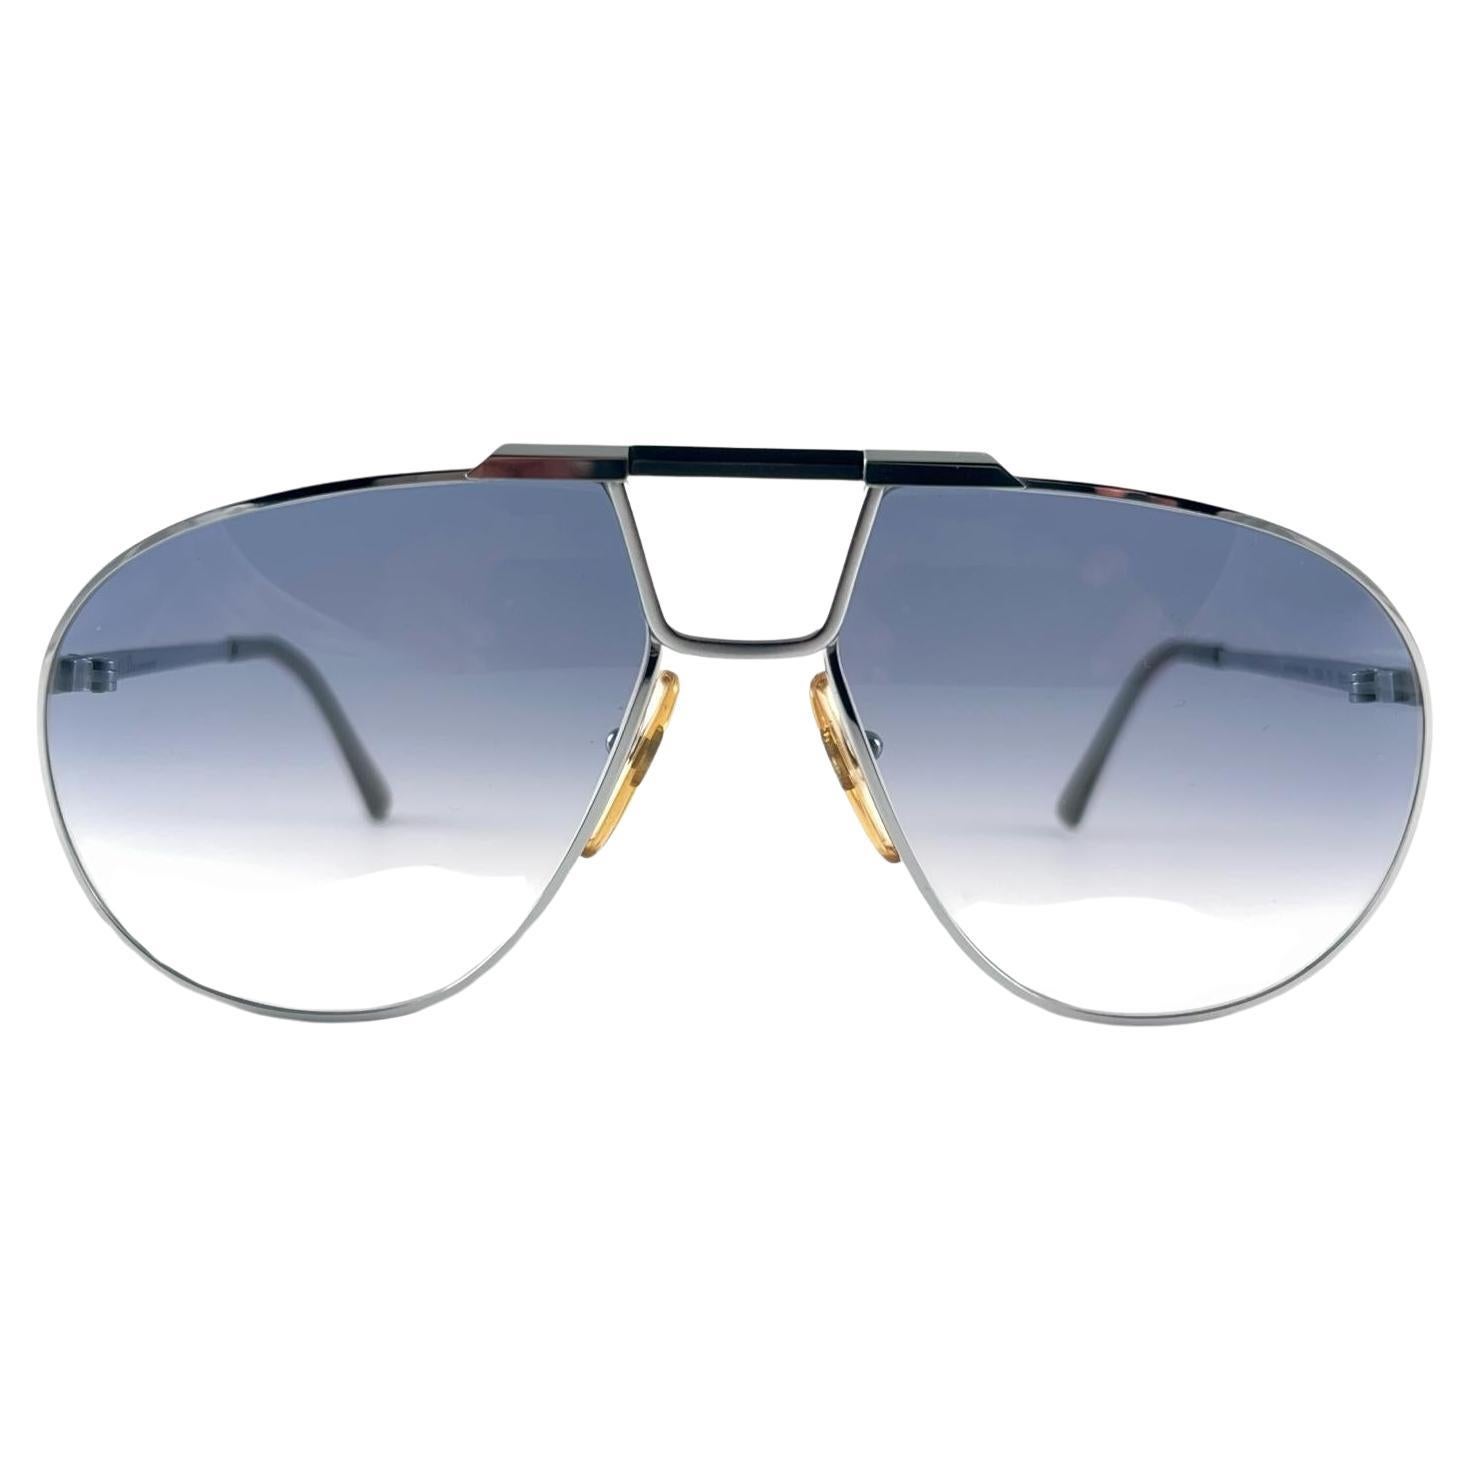 Christian Dior Woman's Oversize Sunglasses Original Frames Model 2346, 125  mm | eBay